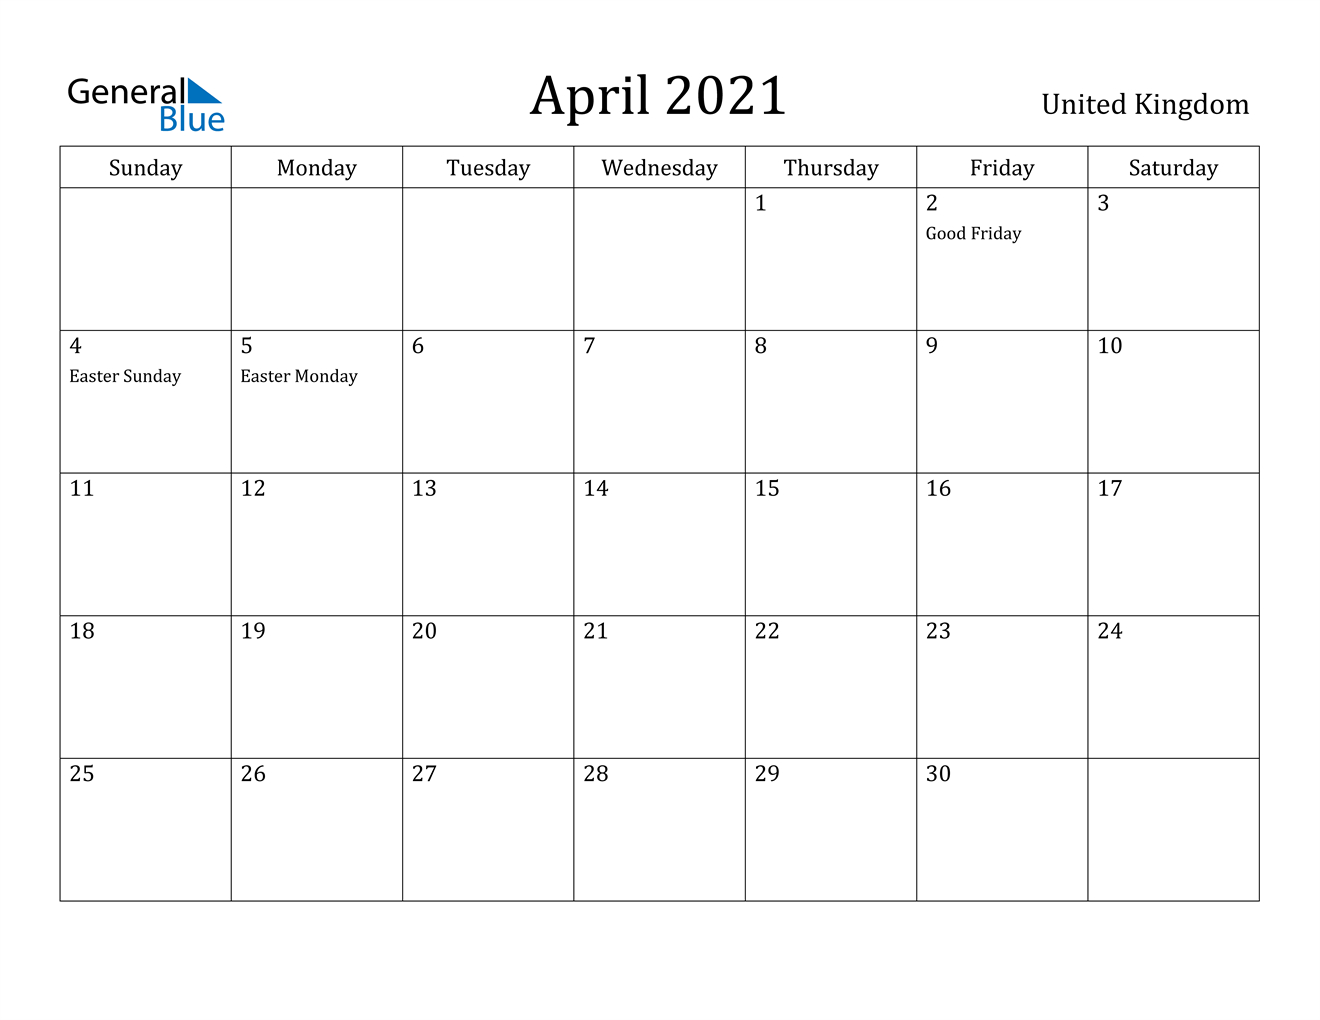 April 2021 Calendar - United Kingdom